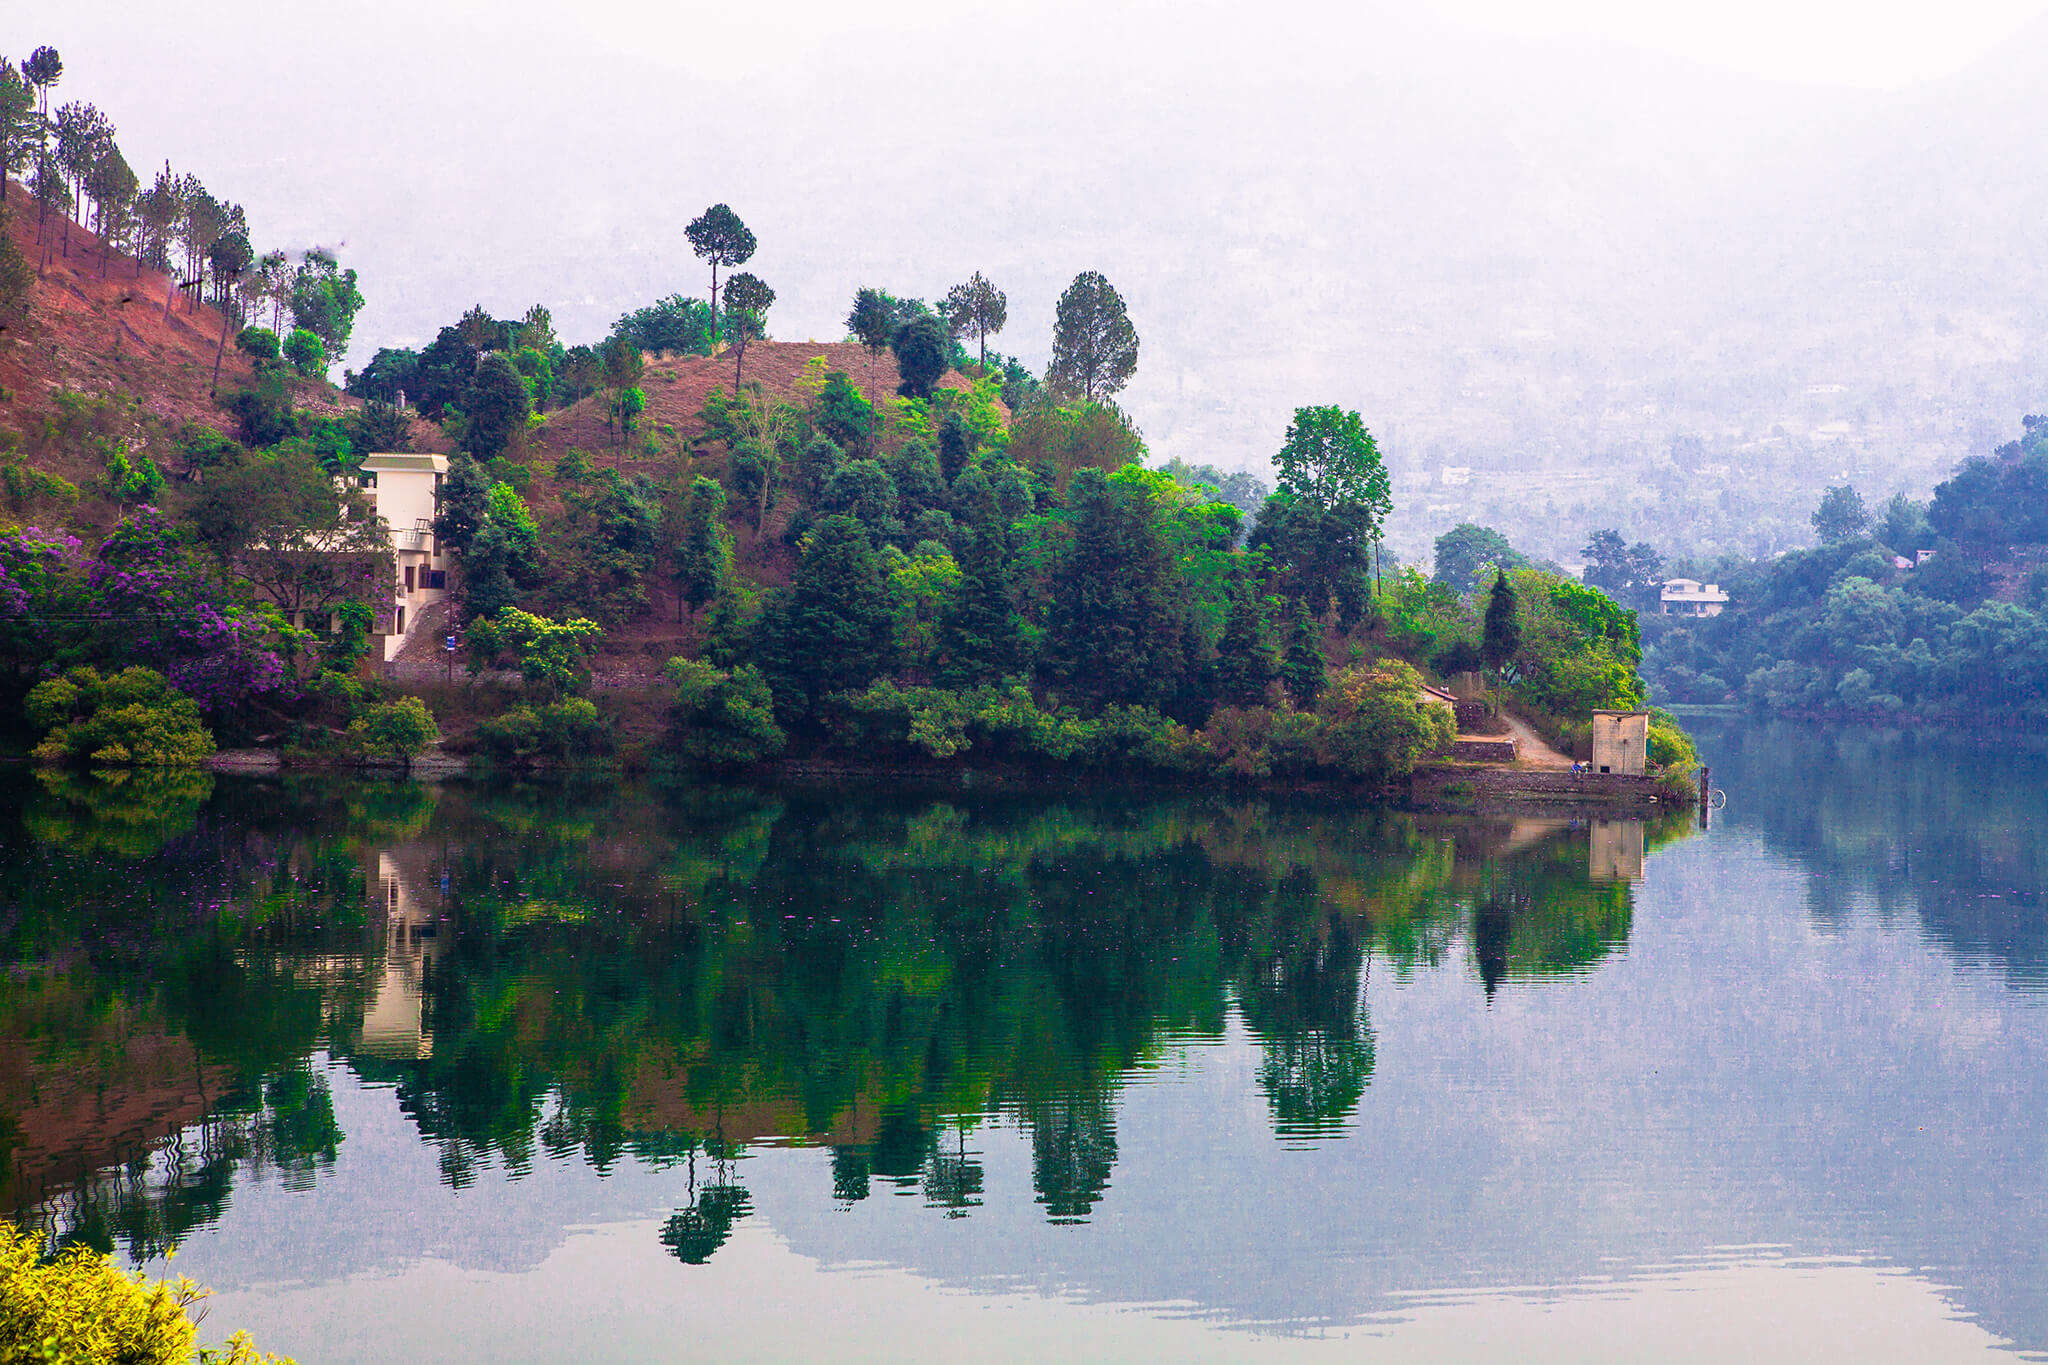 Reflection of trees on a beautiful lake